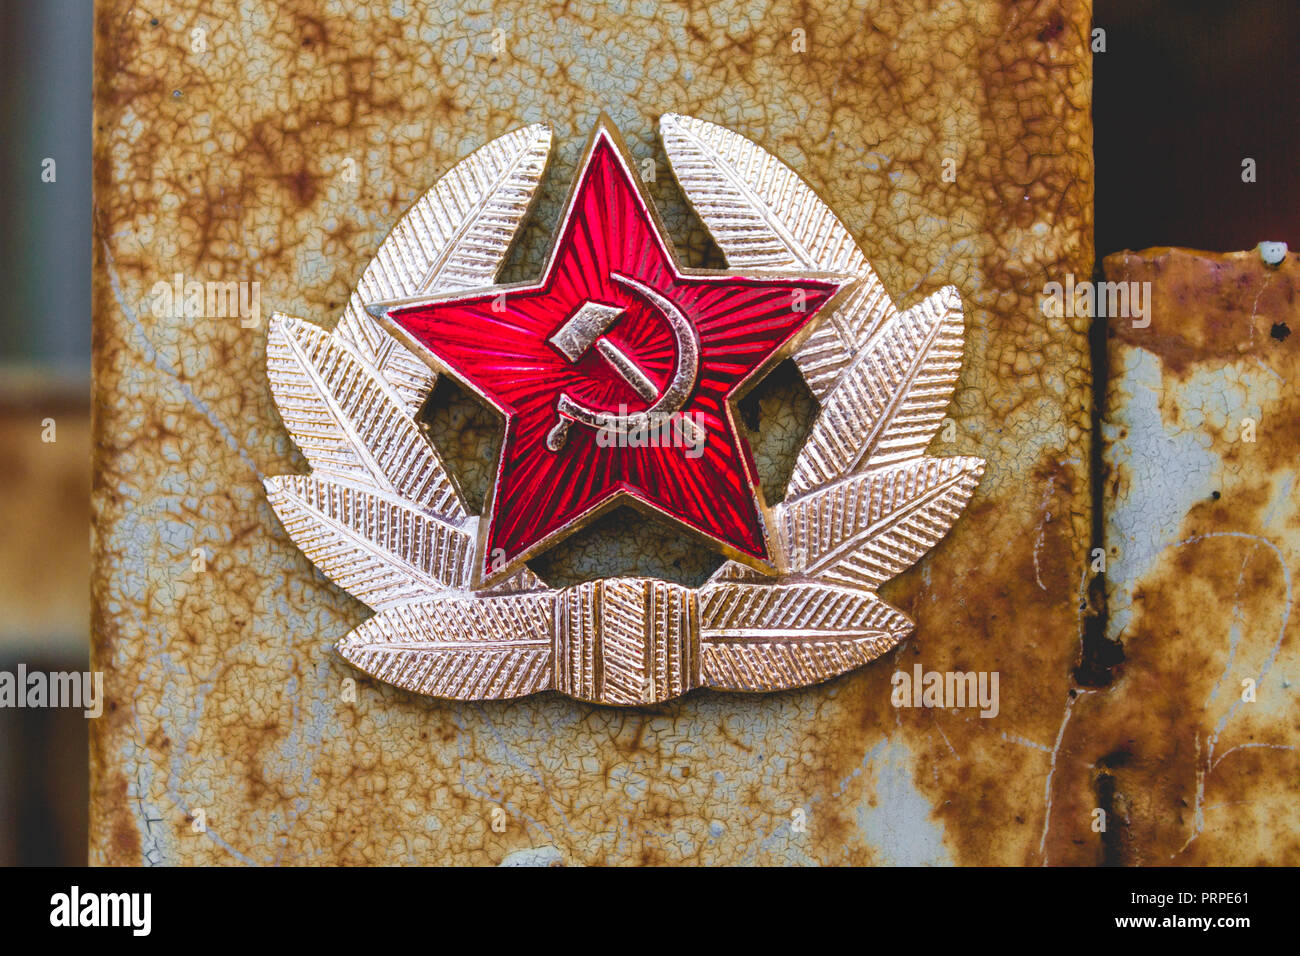 National Bolshevik Flag, Brooch Badges, Lapel Pins